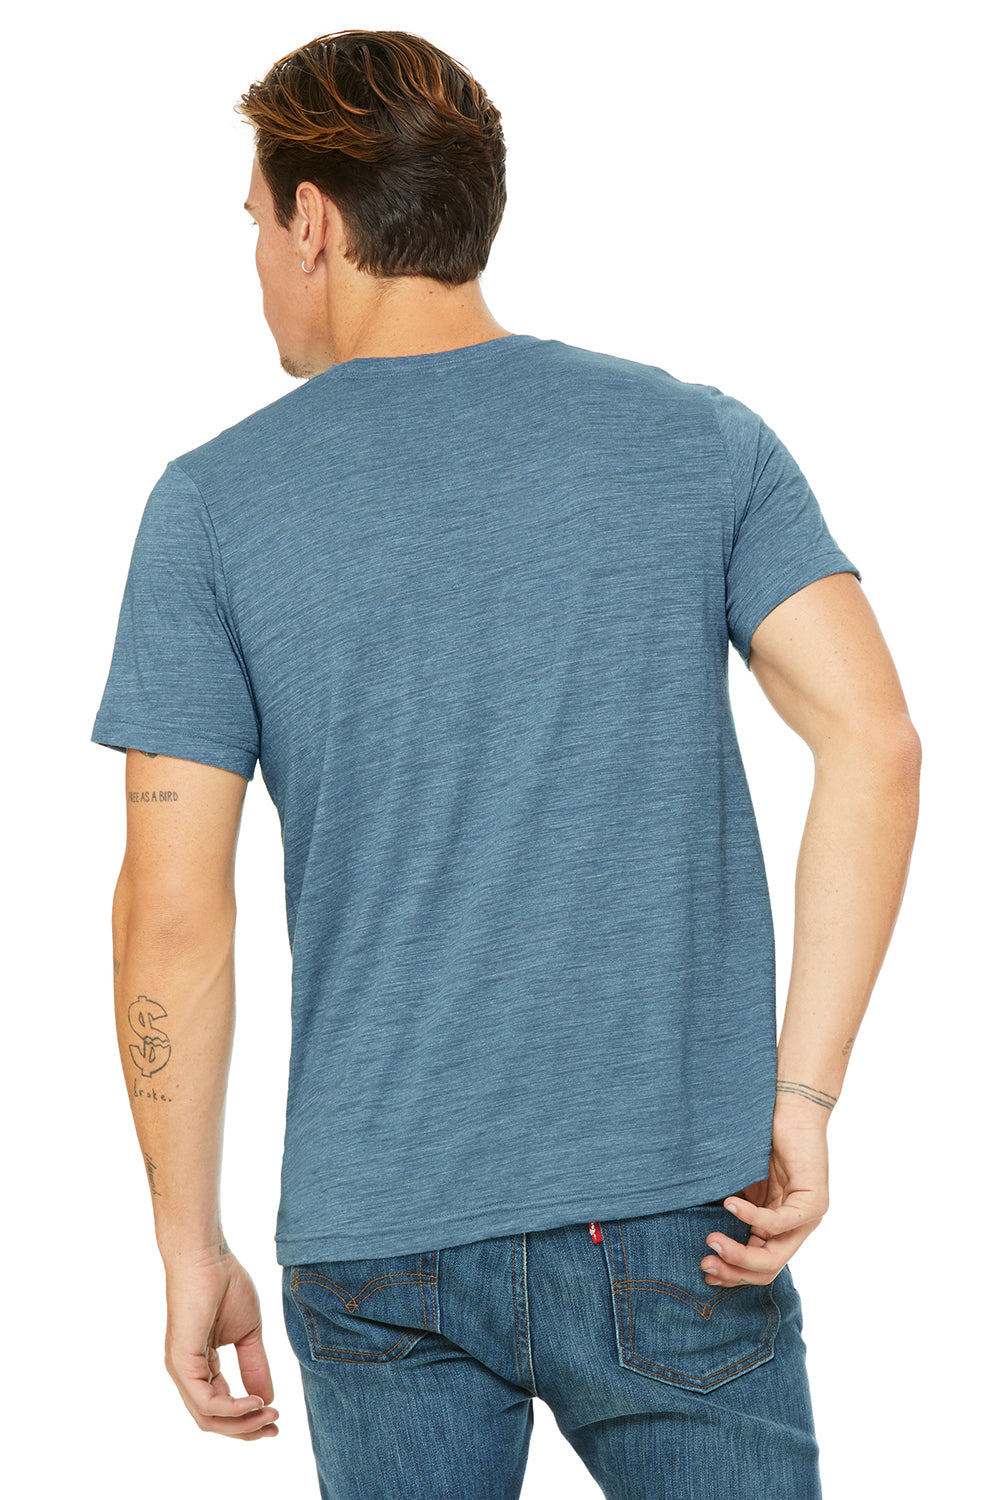 Bella + Canvas 3650 Mens Short Sleeve Crewneck T-Shirt Denim Blue Slub Back